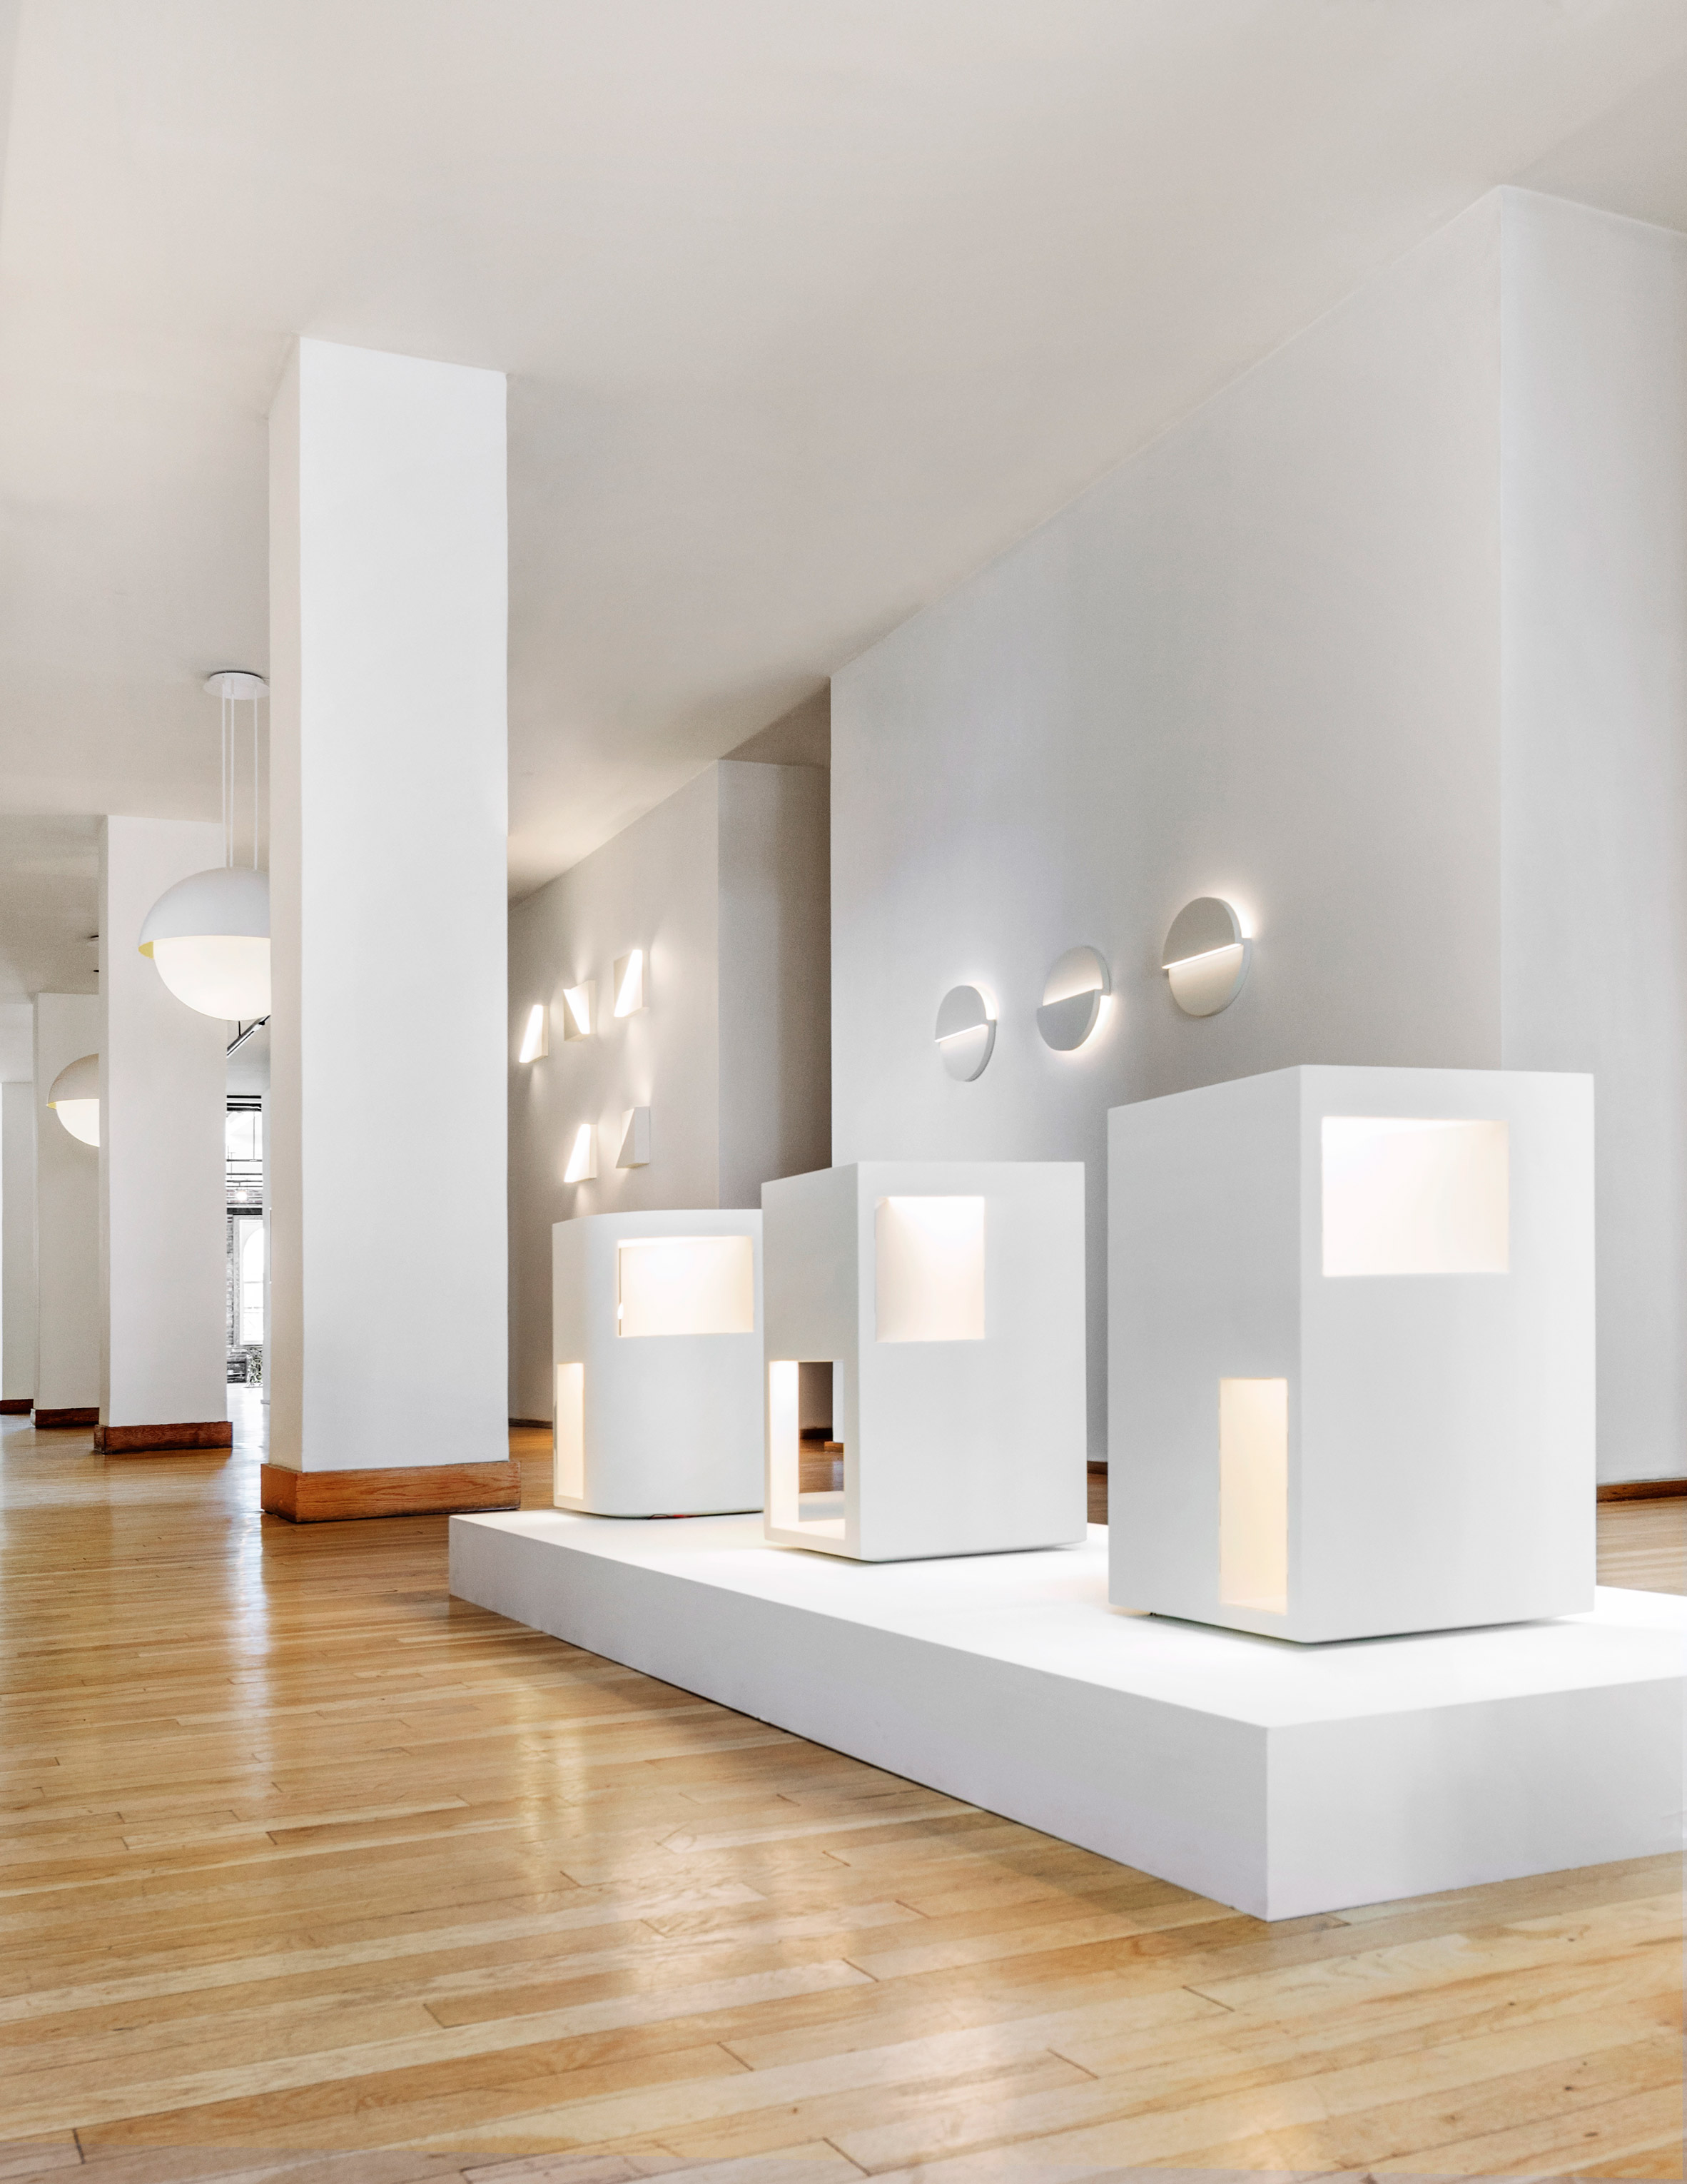 Richard Meier lighting collection